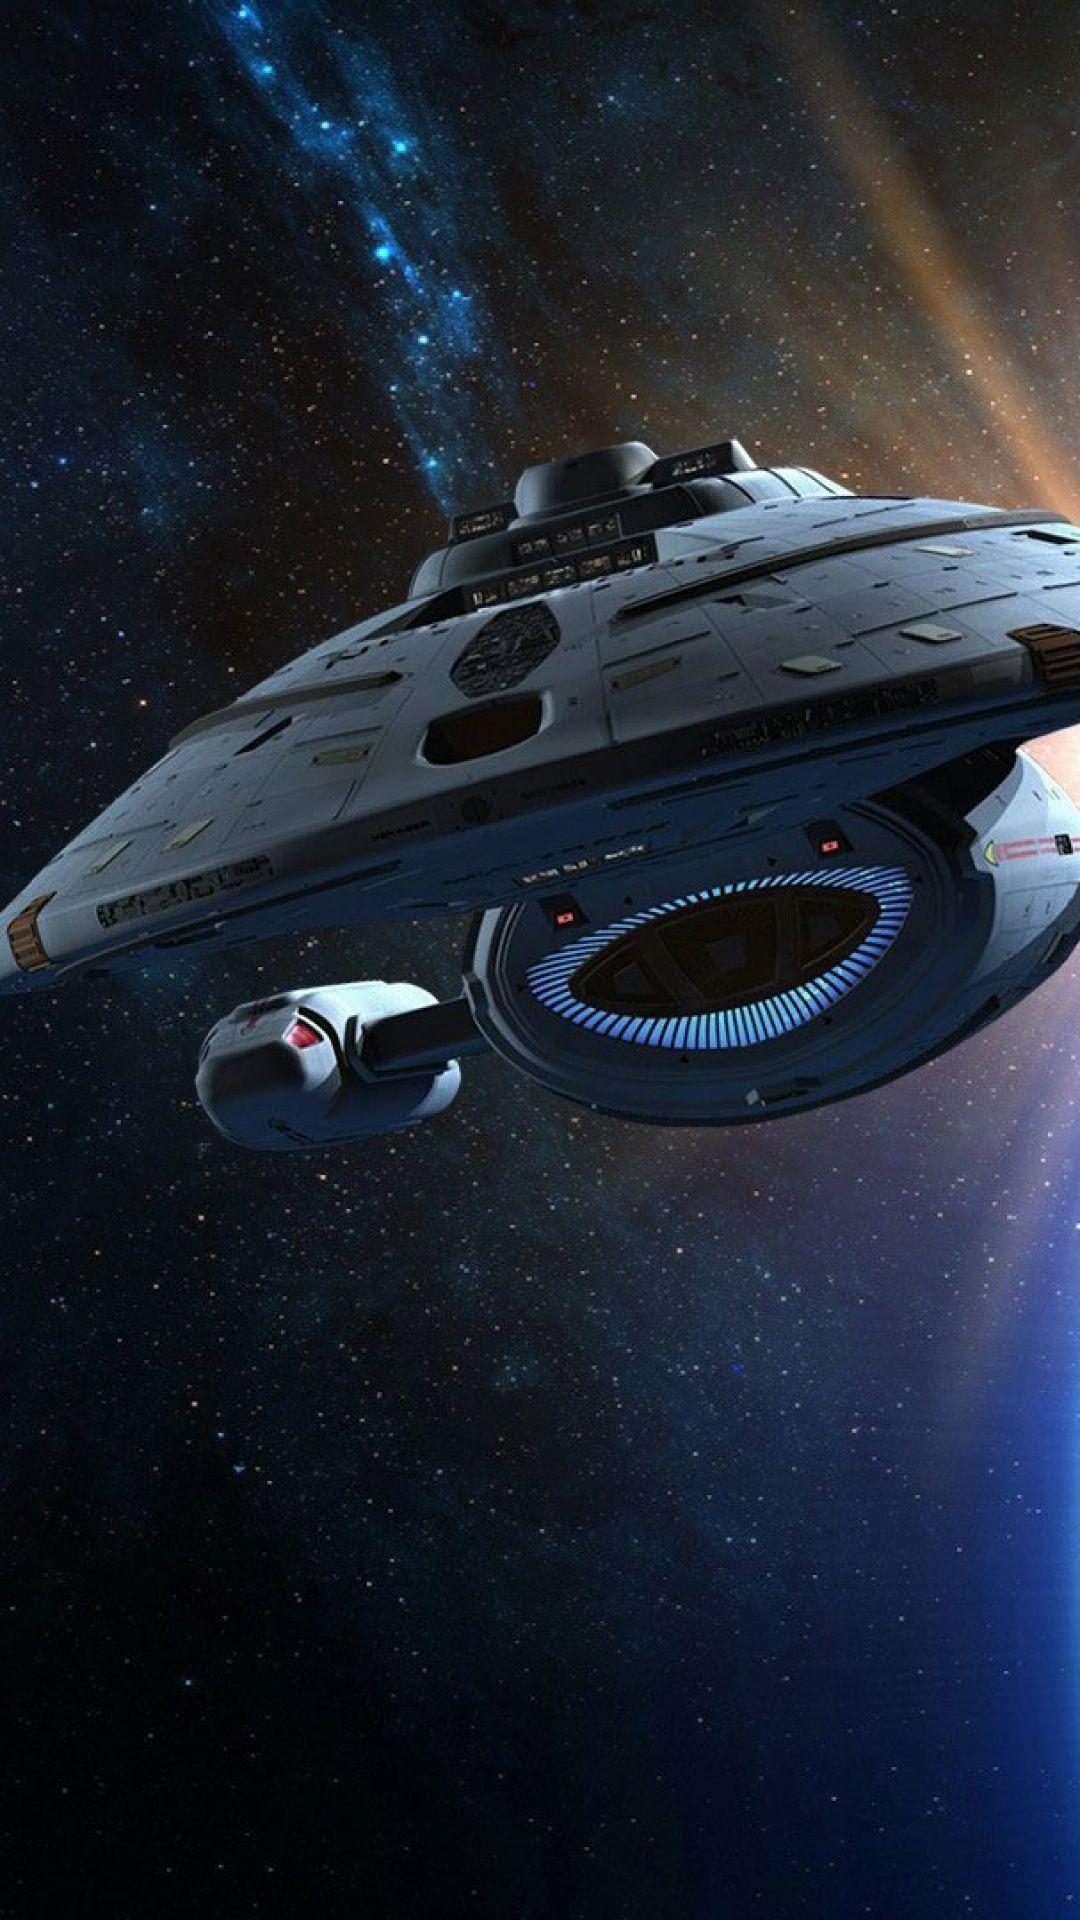 Star Trek Voyager Wallpapers Top Free Star Trek Voyager Backgrounds Wallpaperaccess